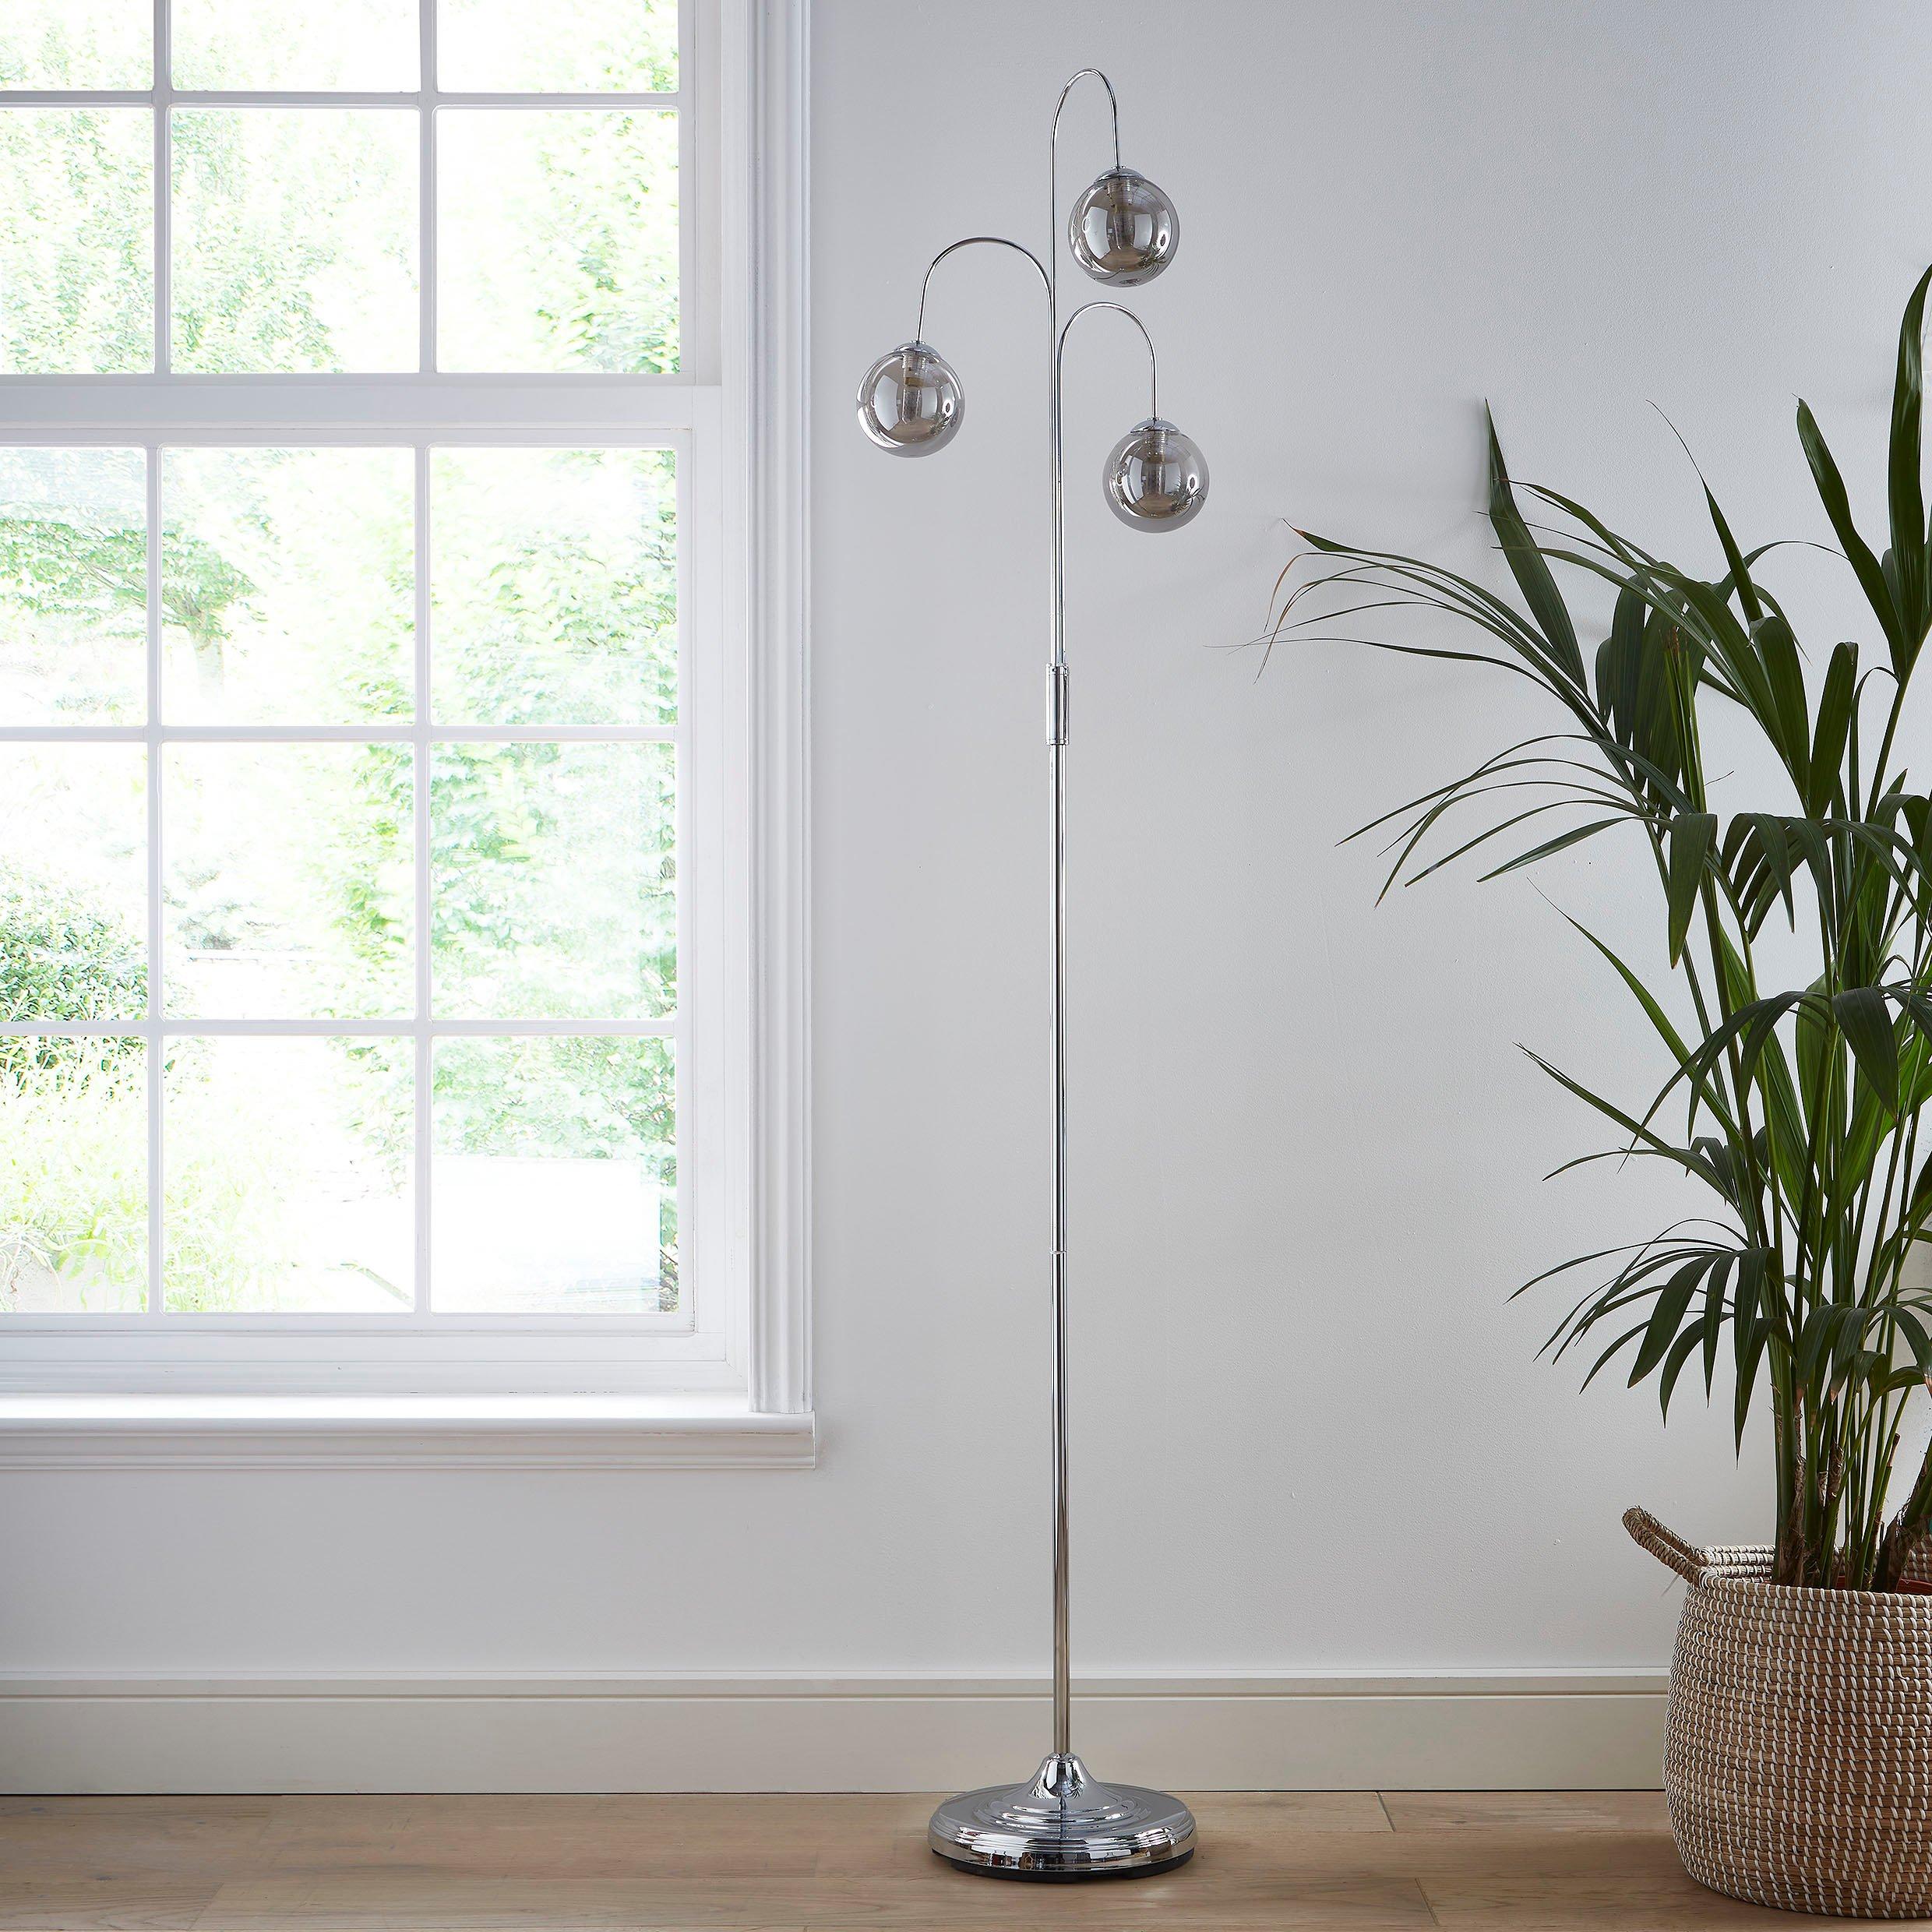 Chrome 3 light Floor lamp with smokey grey colour glass shades providing a modern home feel